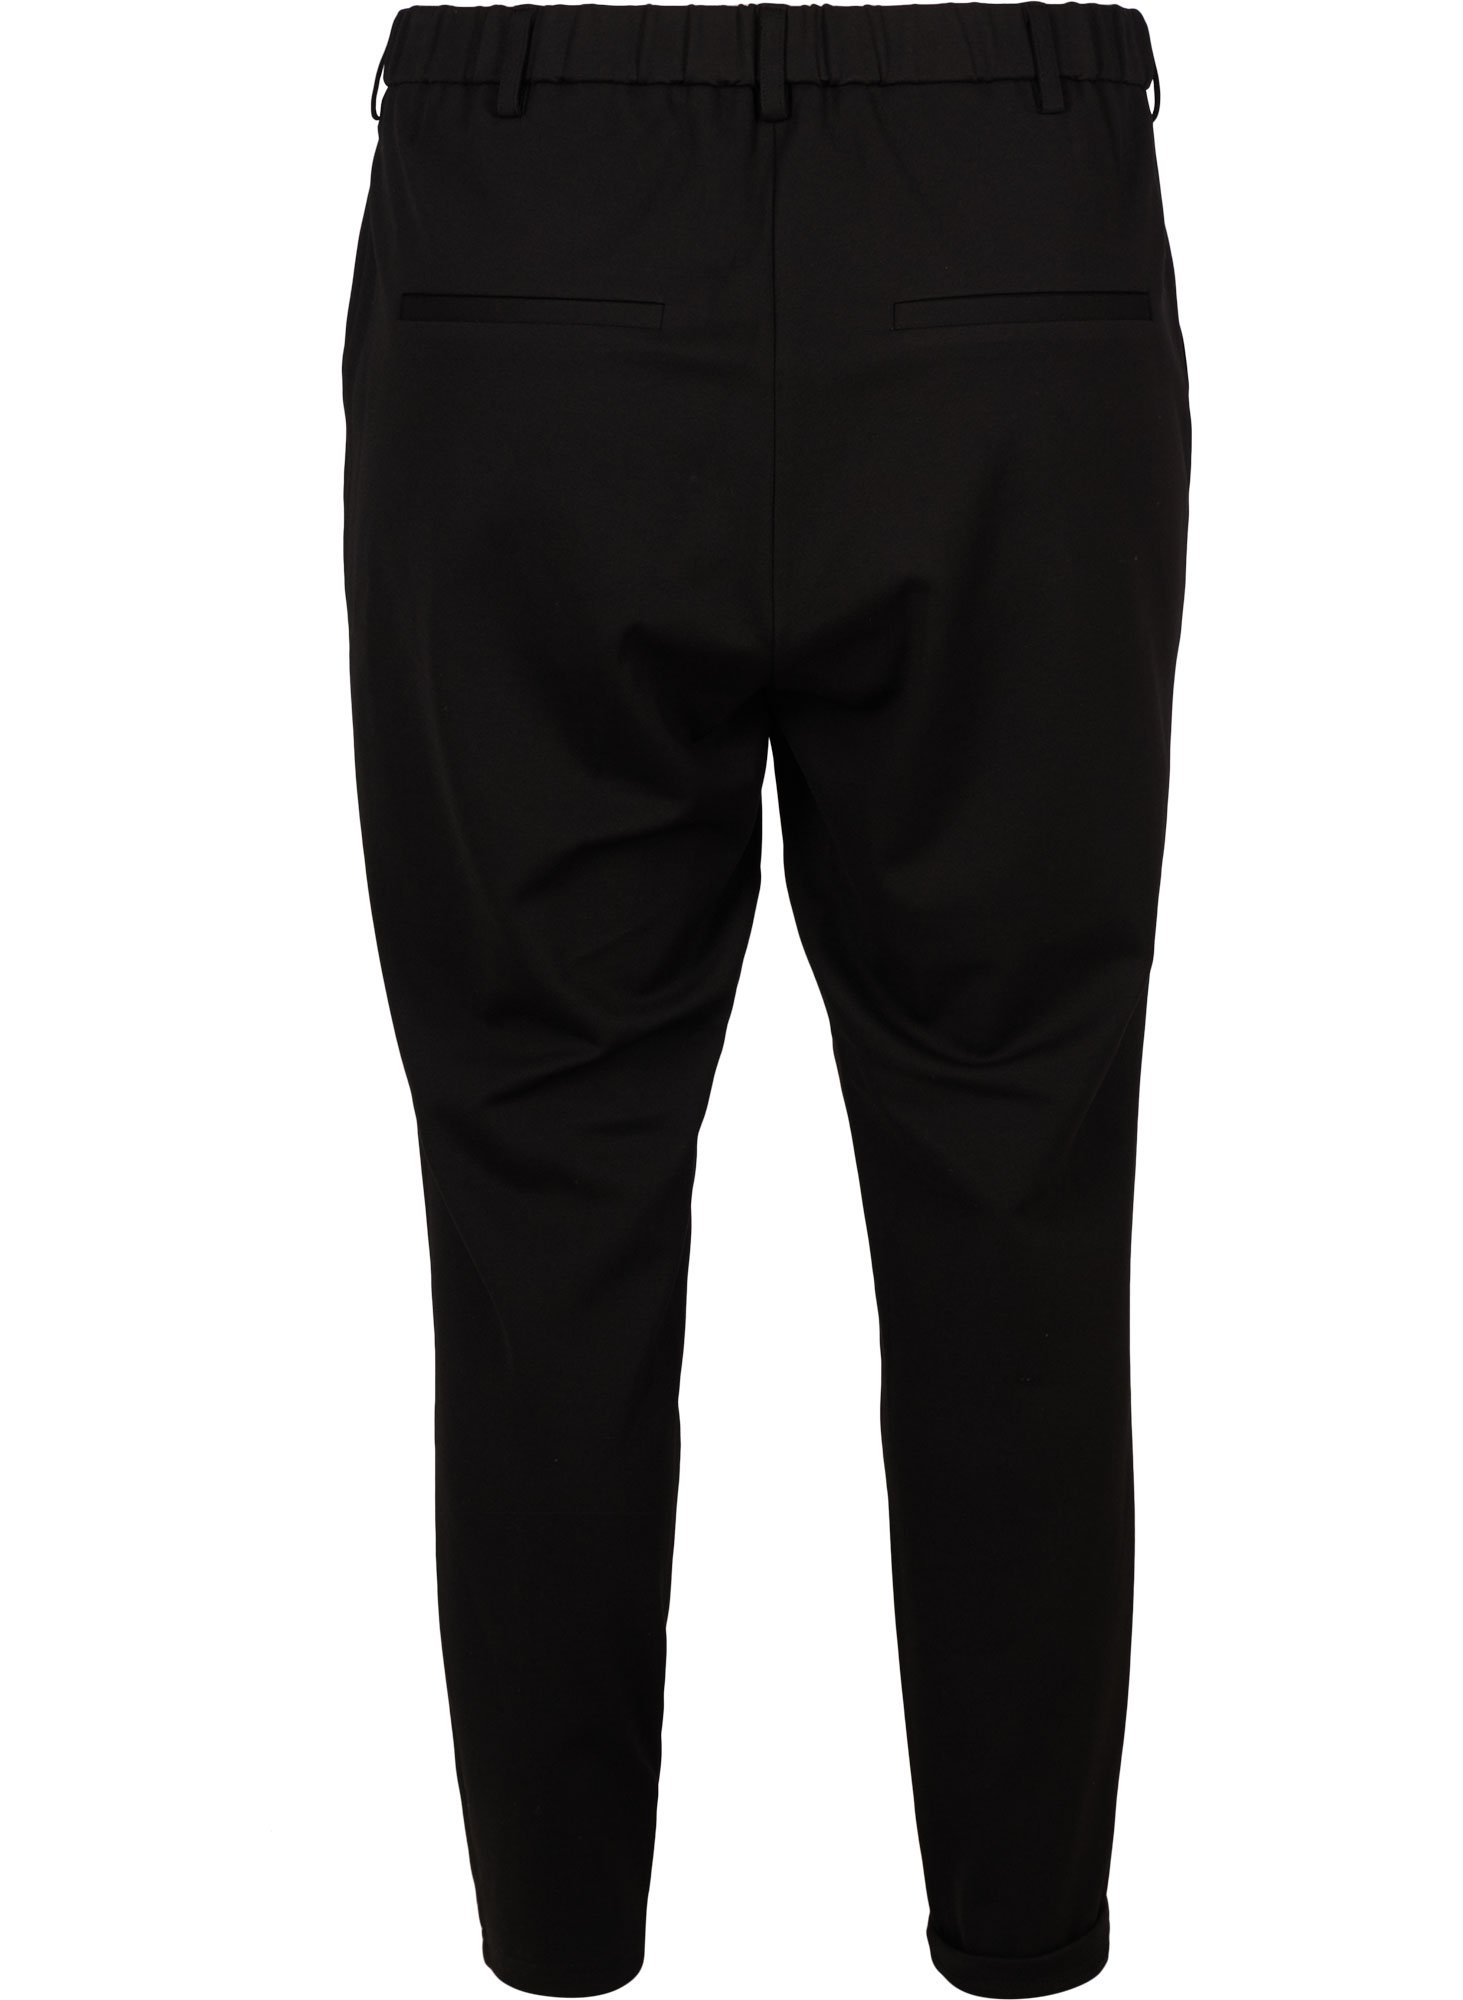 Klassisk udseende jersey bukser i sort fra Zizzi